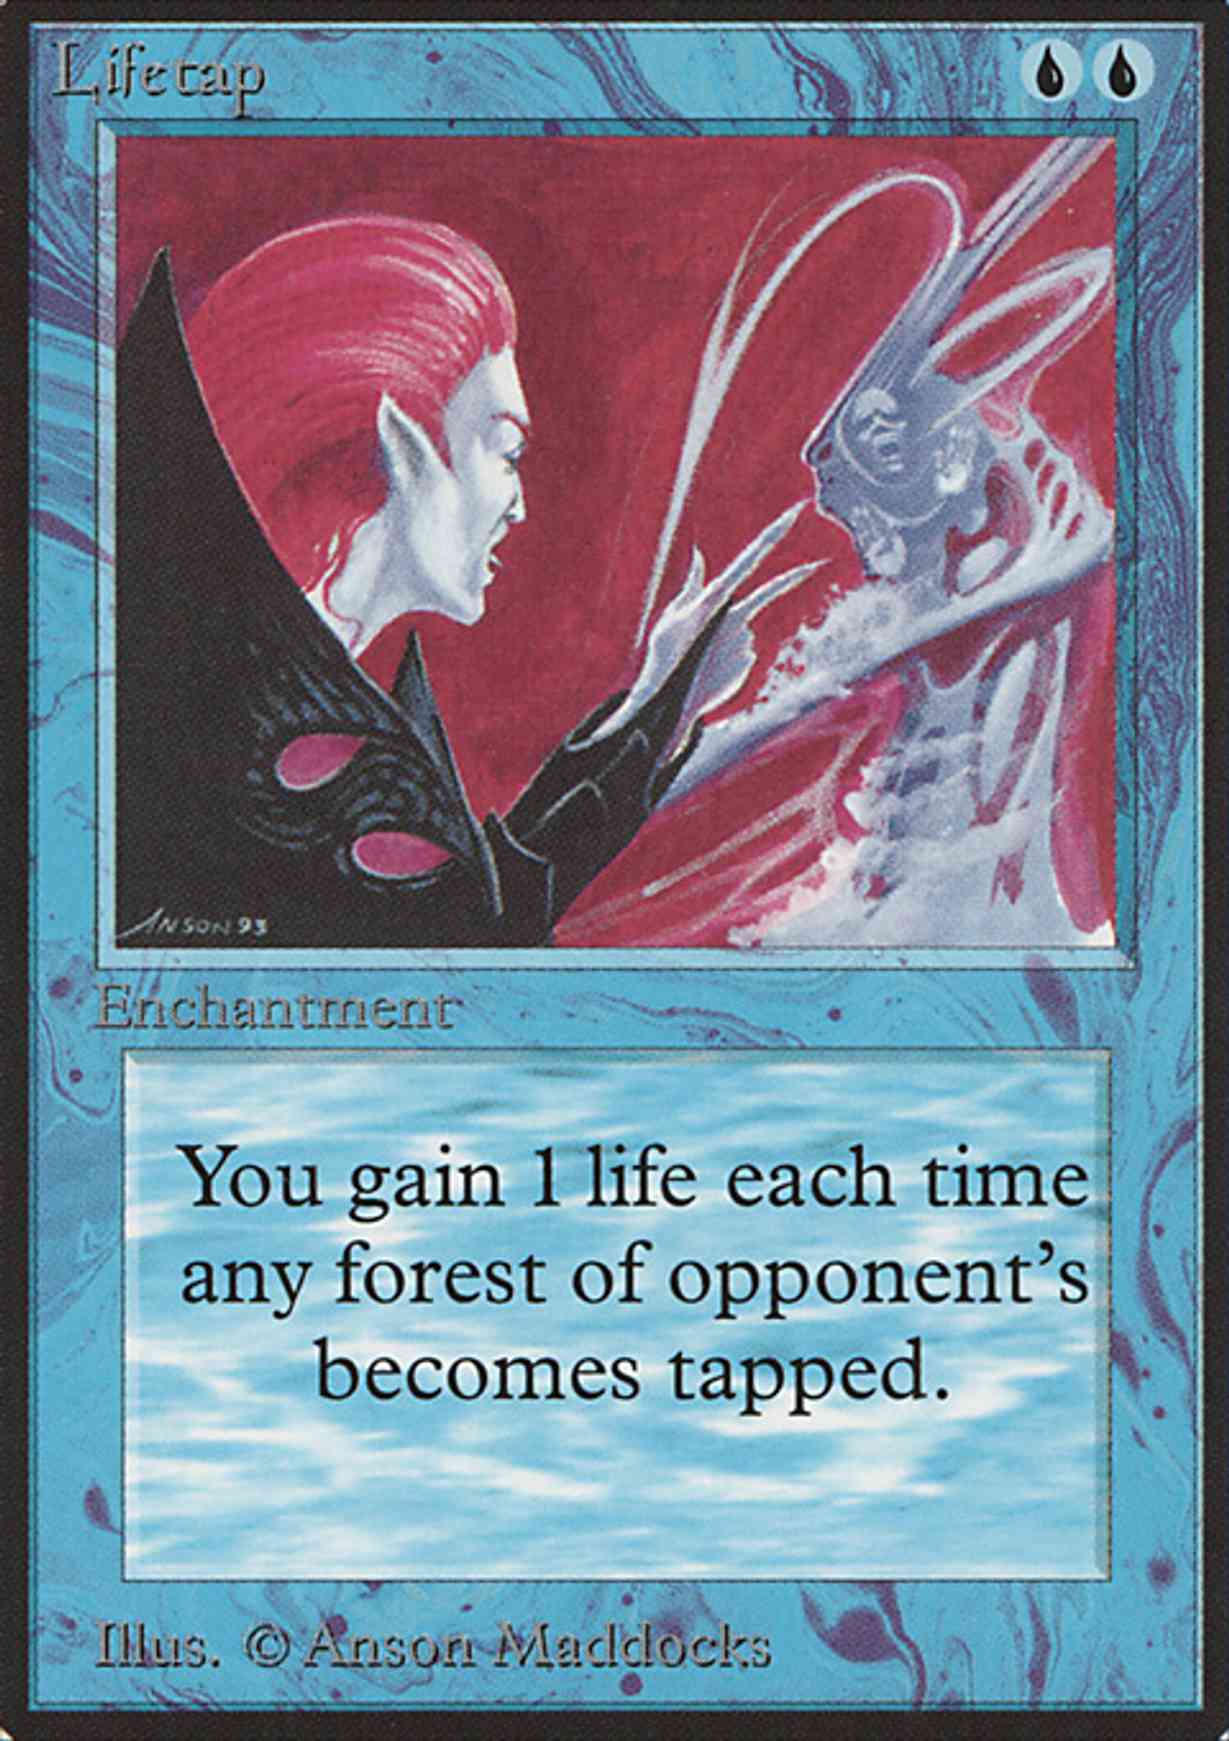 Lifetap magic card front